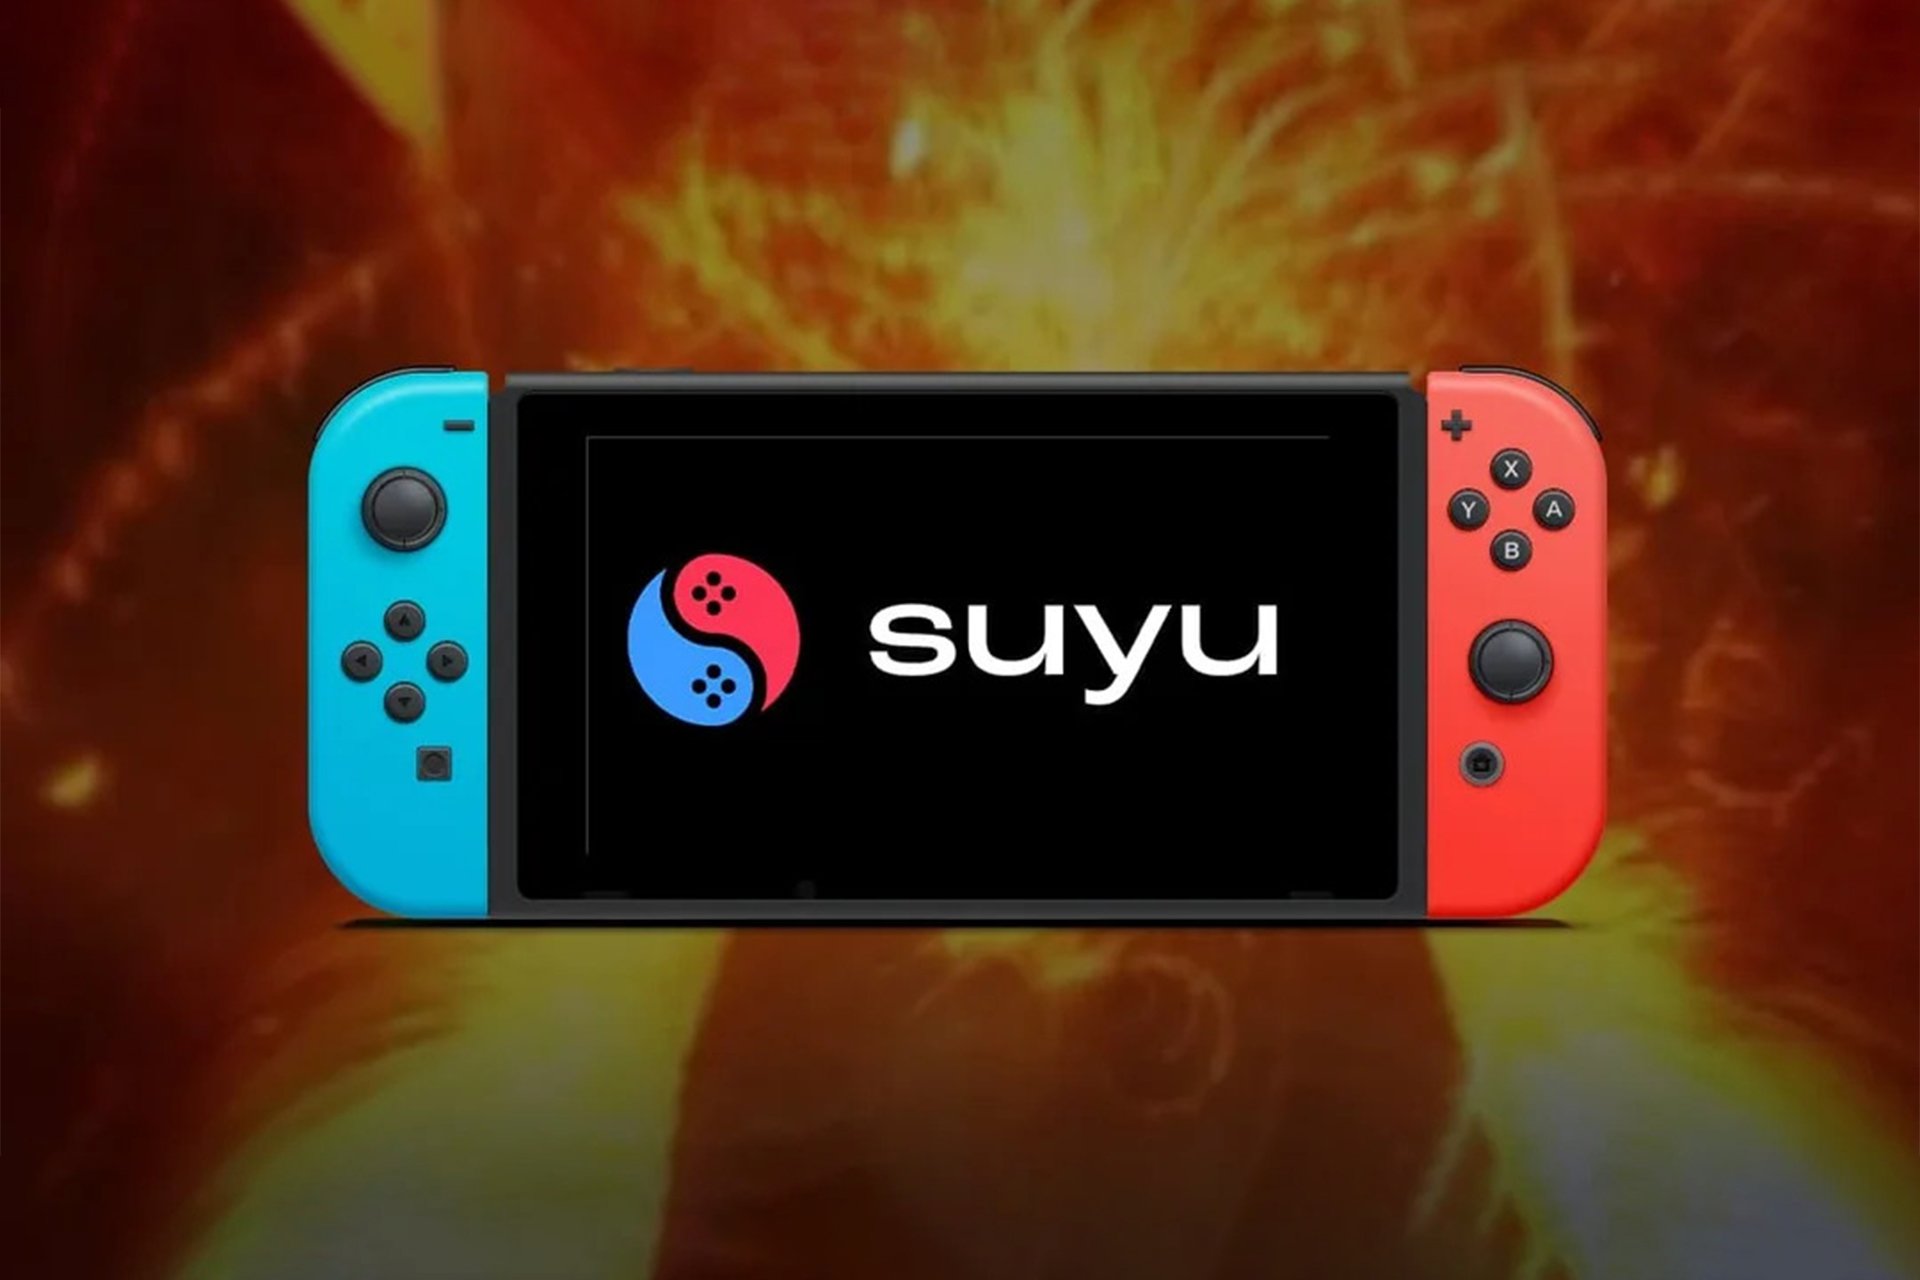 Suyu and Sudachi emulator